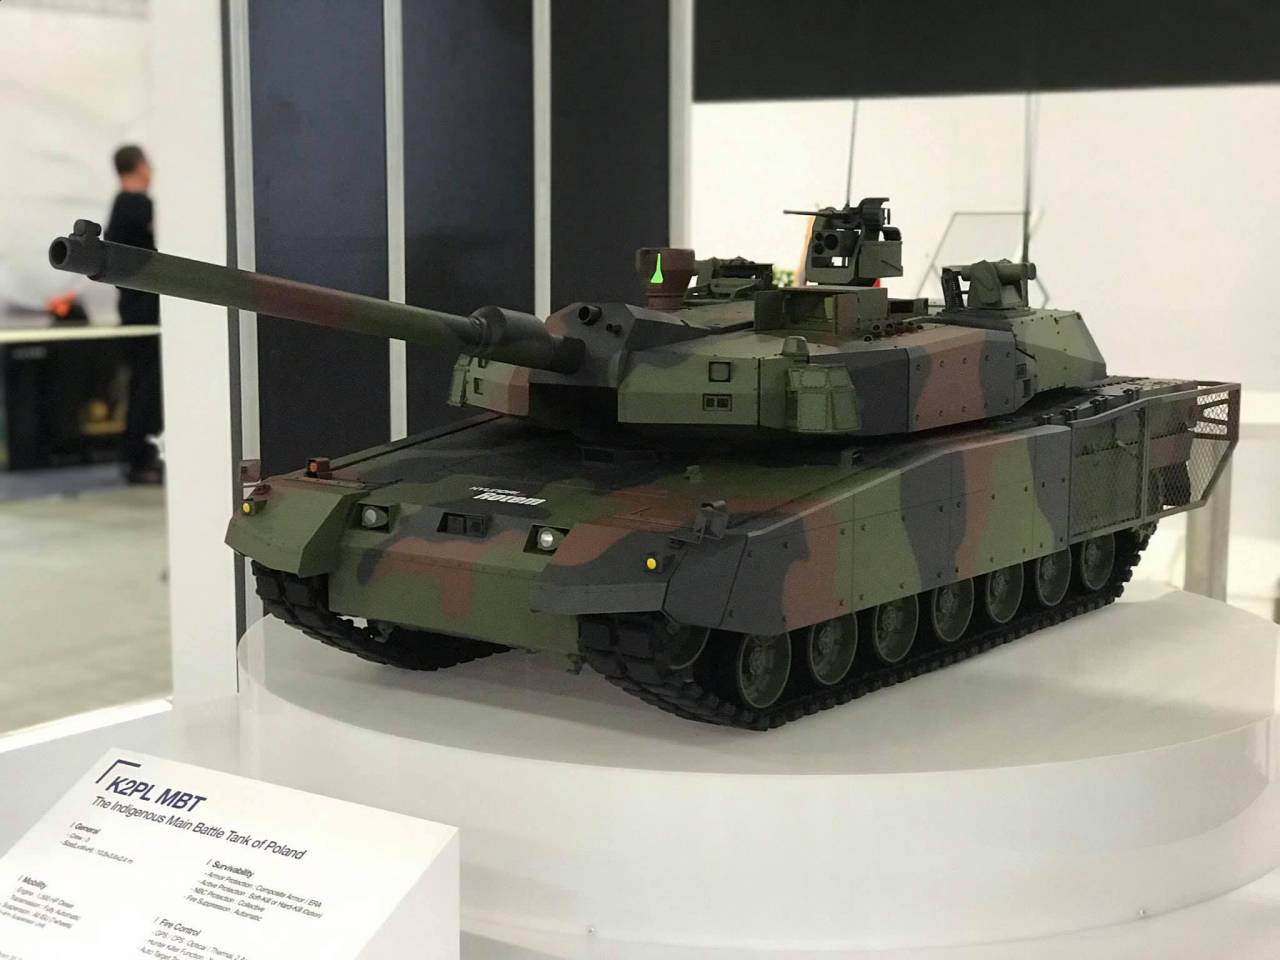 Hyundai Rotem eyes global market with advanced K2 tank, unmanned vehicle